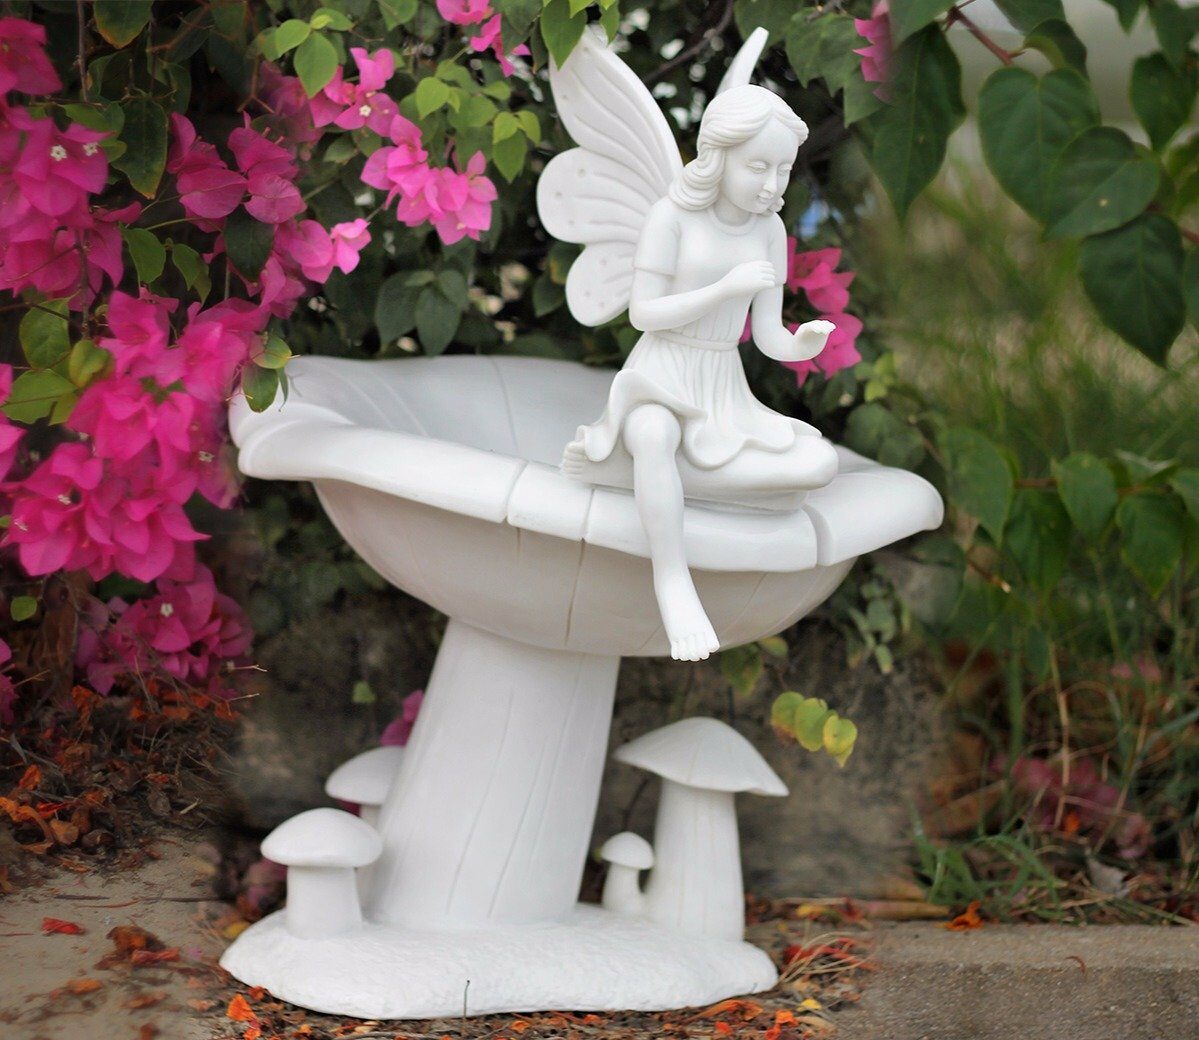 Dinova Fairy On A Toadstool 49Cm Statue 3C071Ea7667872B09Cc93Afb2545A45C Original